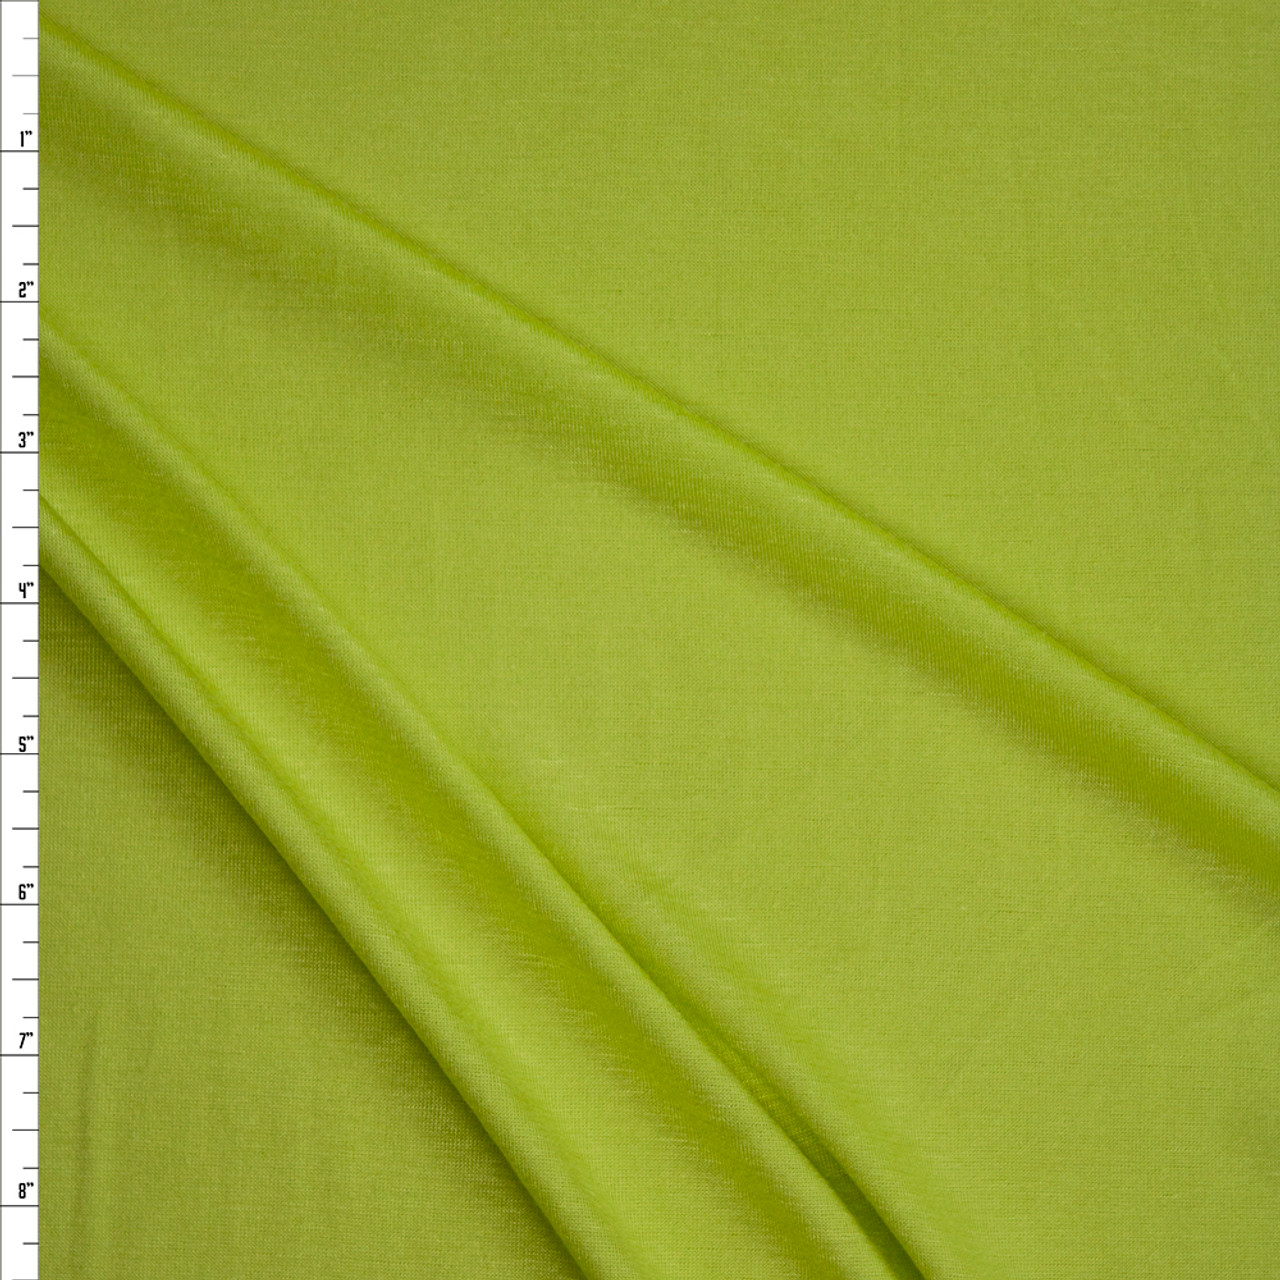 Cali Fabrics Bright Lime Green Lightweight Rayon Jersey Knit Fabric by ...